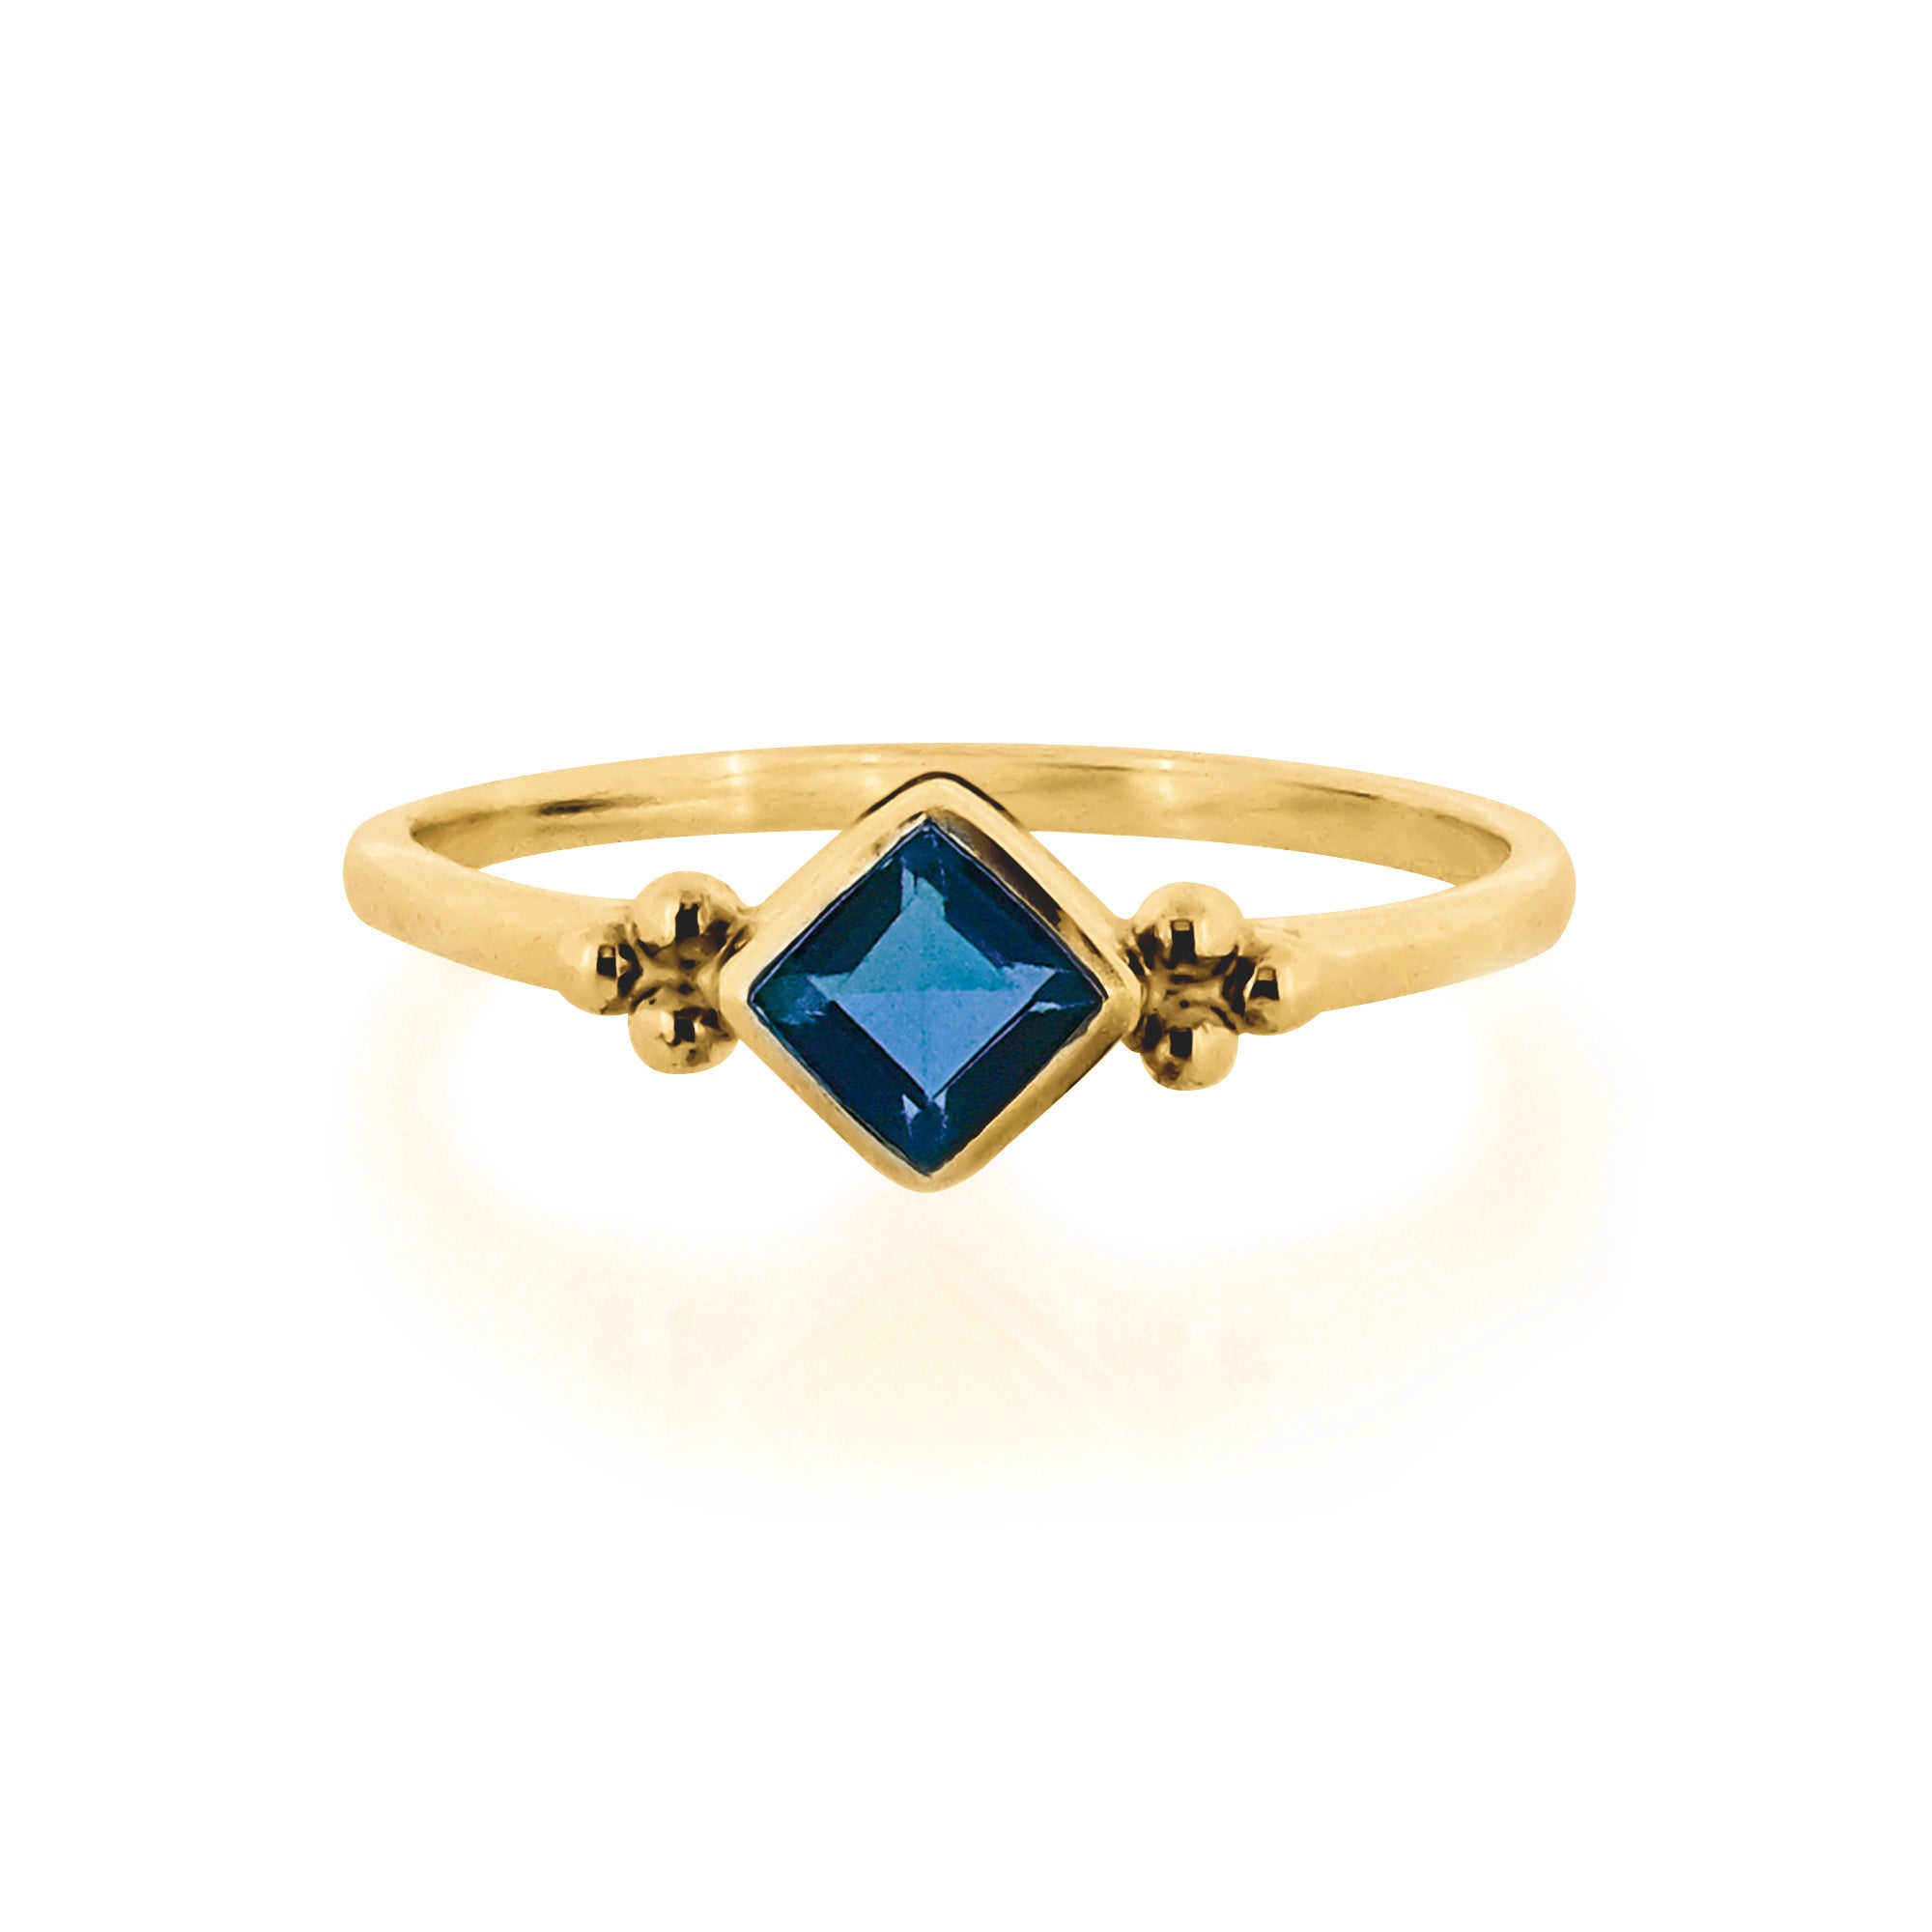 Gold Vermeil ring, Stacking Ring, Square London Blue Topaz Ring